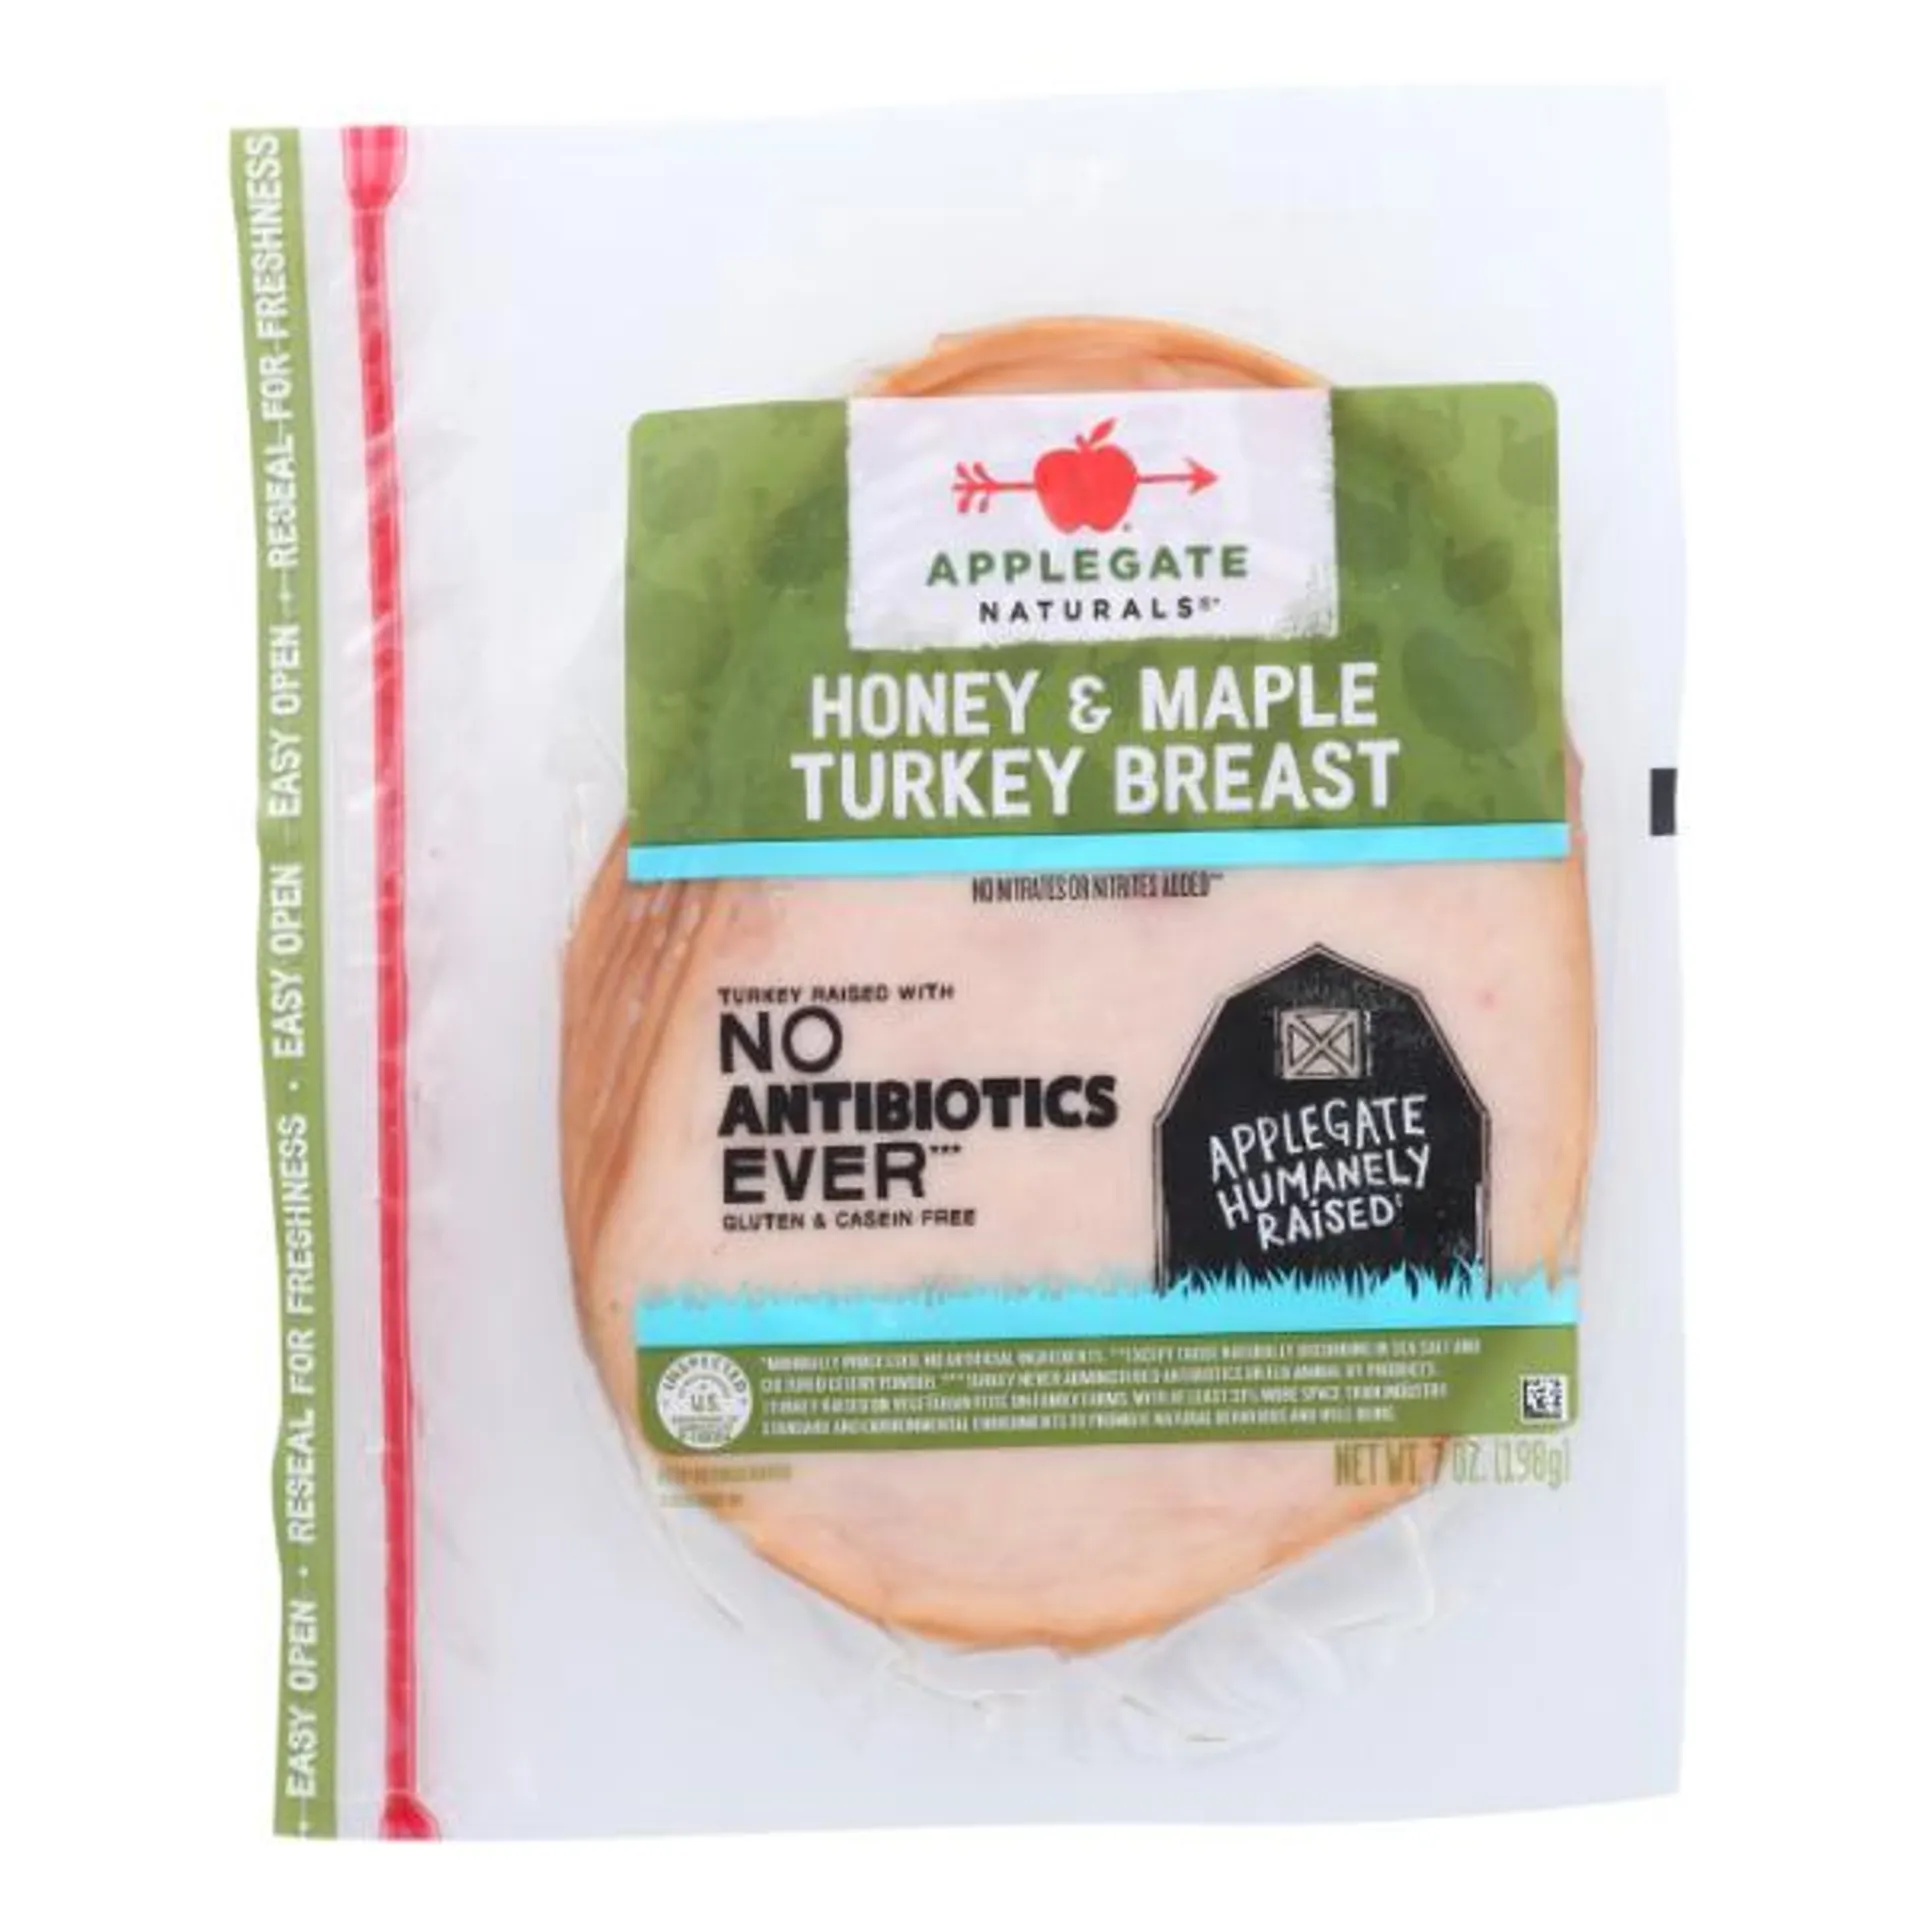 Applegate Naturals Honey & Maple Turkey Breast - 7 Ounce